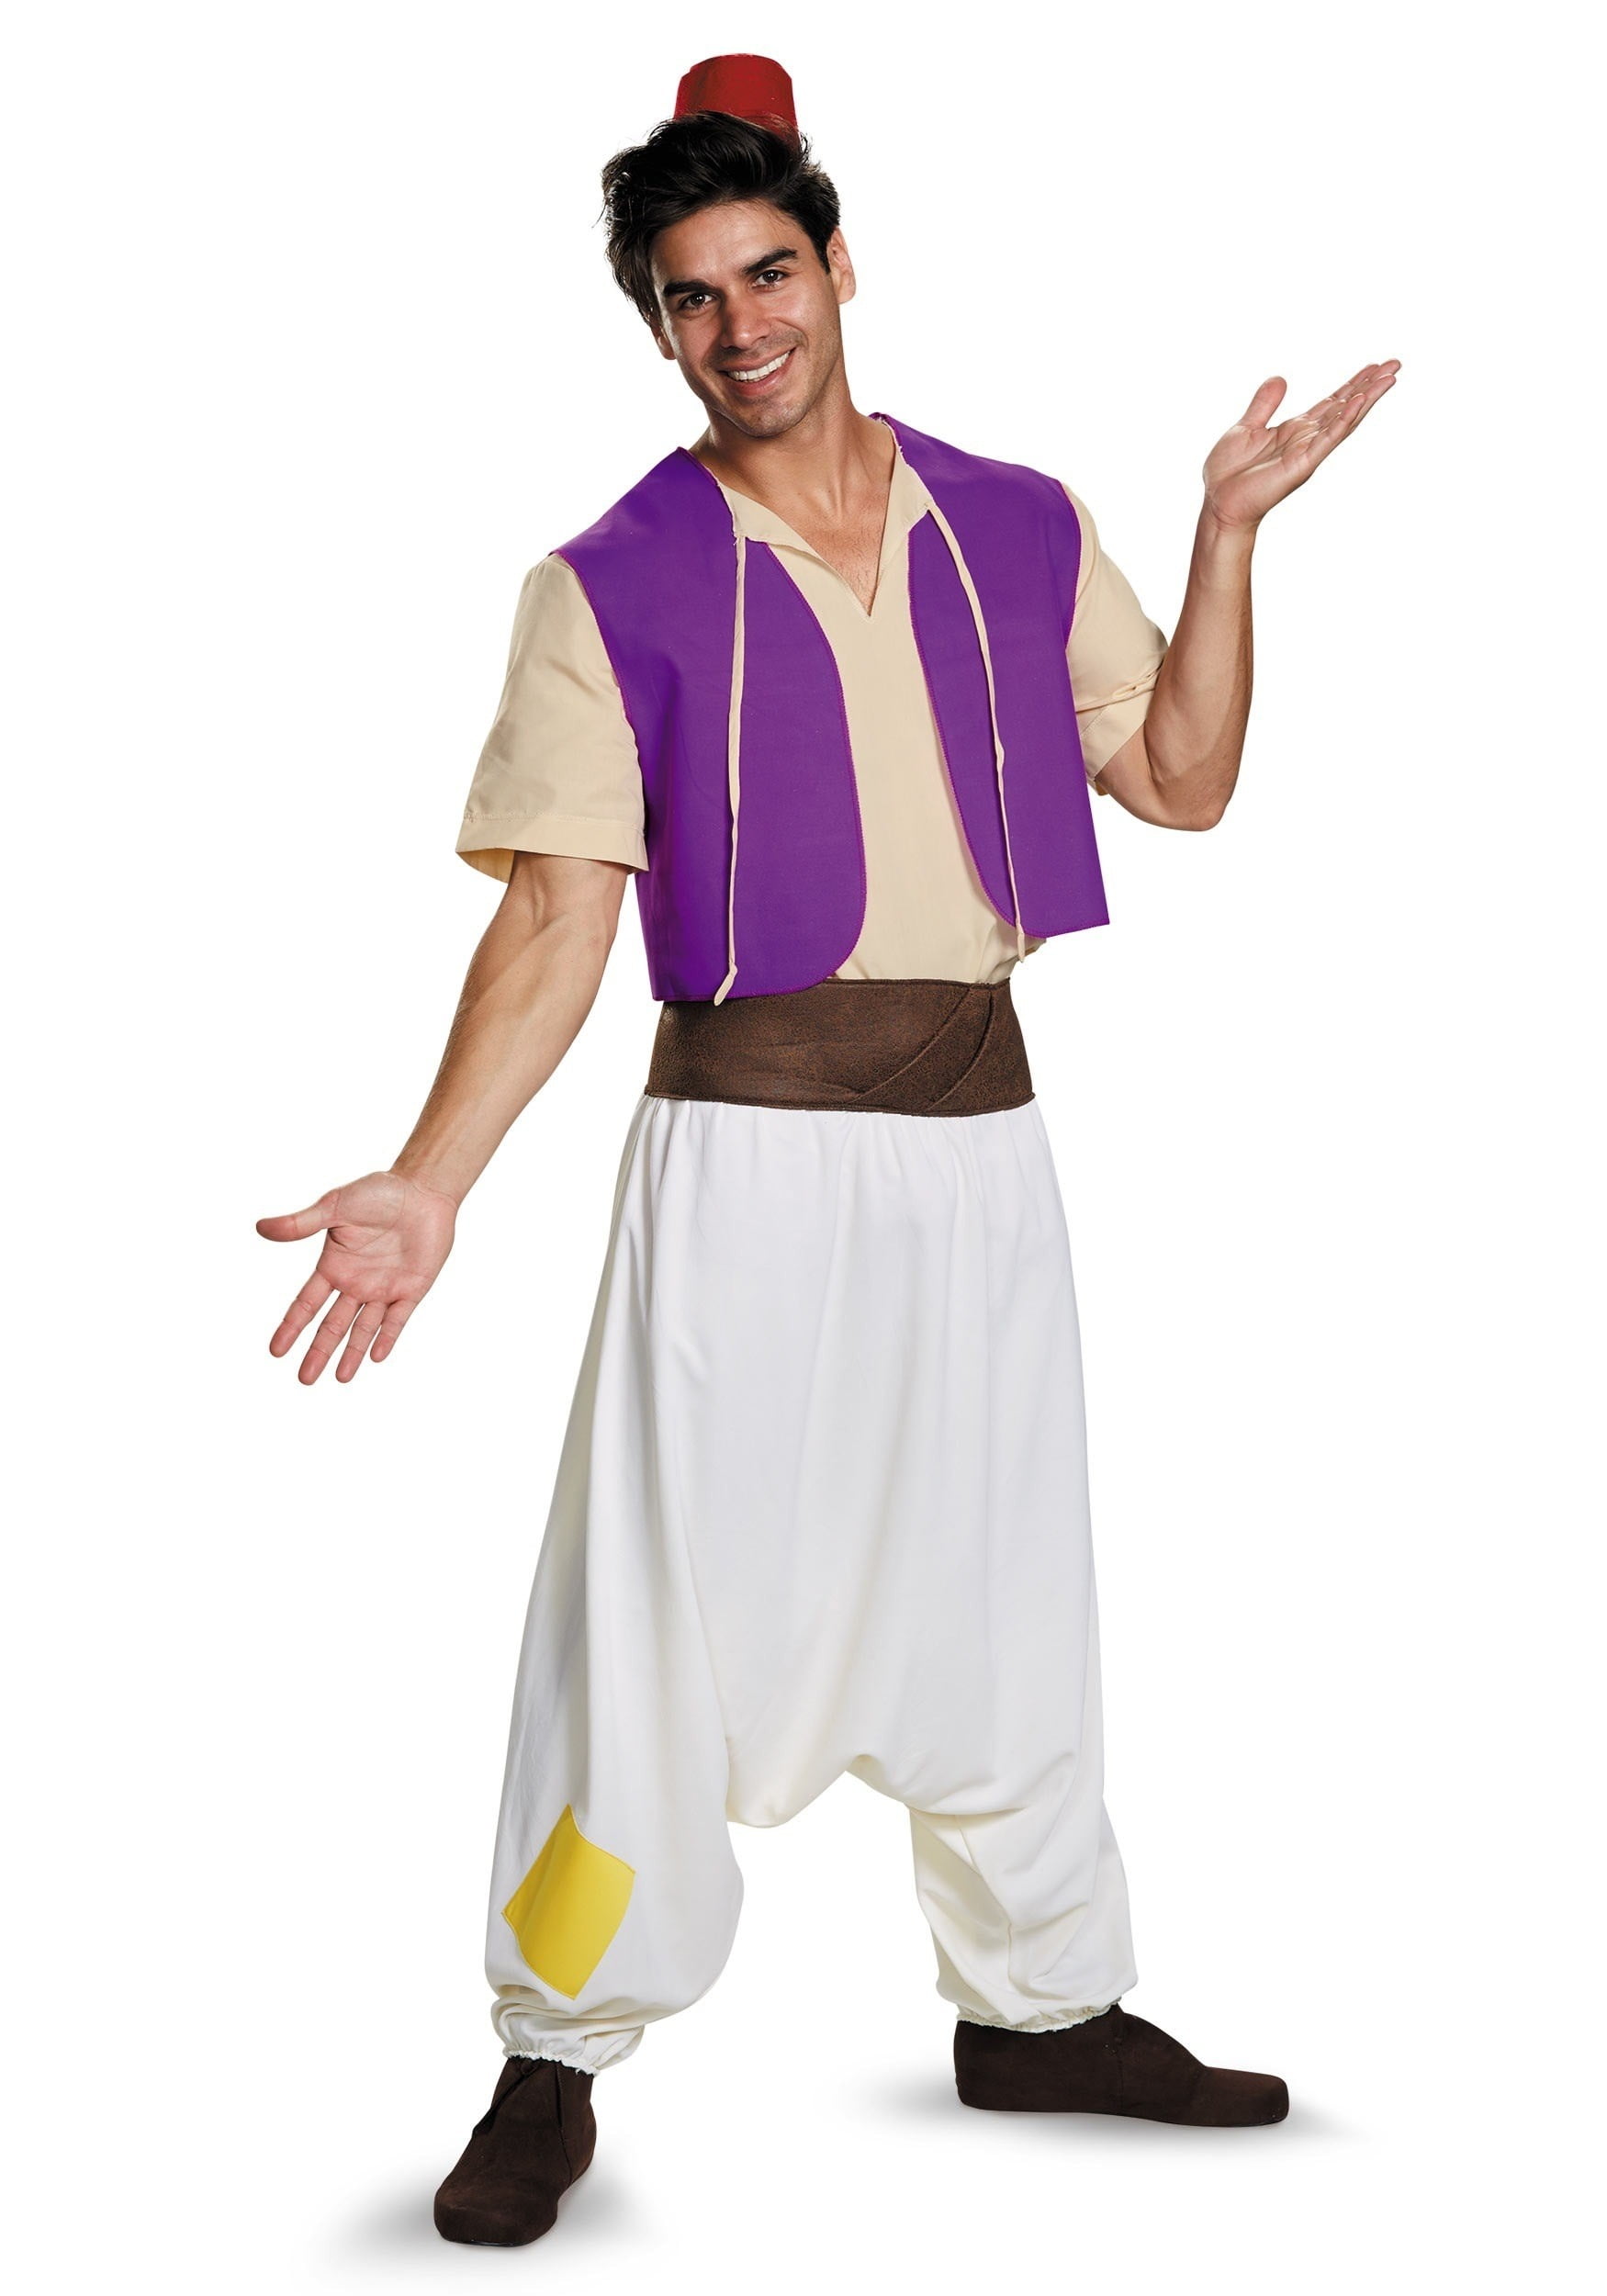 Copper Aladdin Lamp & Cosplay Aladdin Costume Suit for Adult Men 